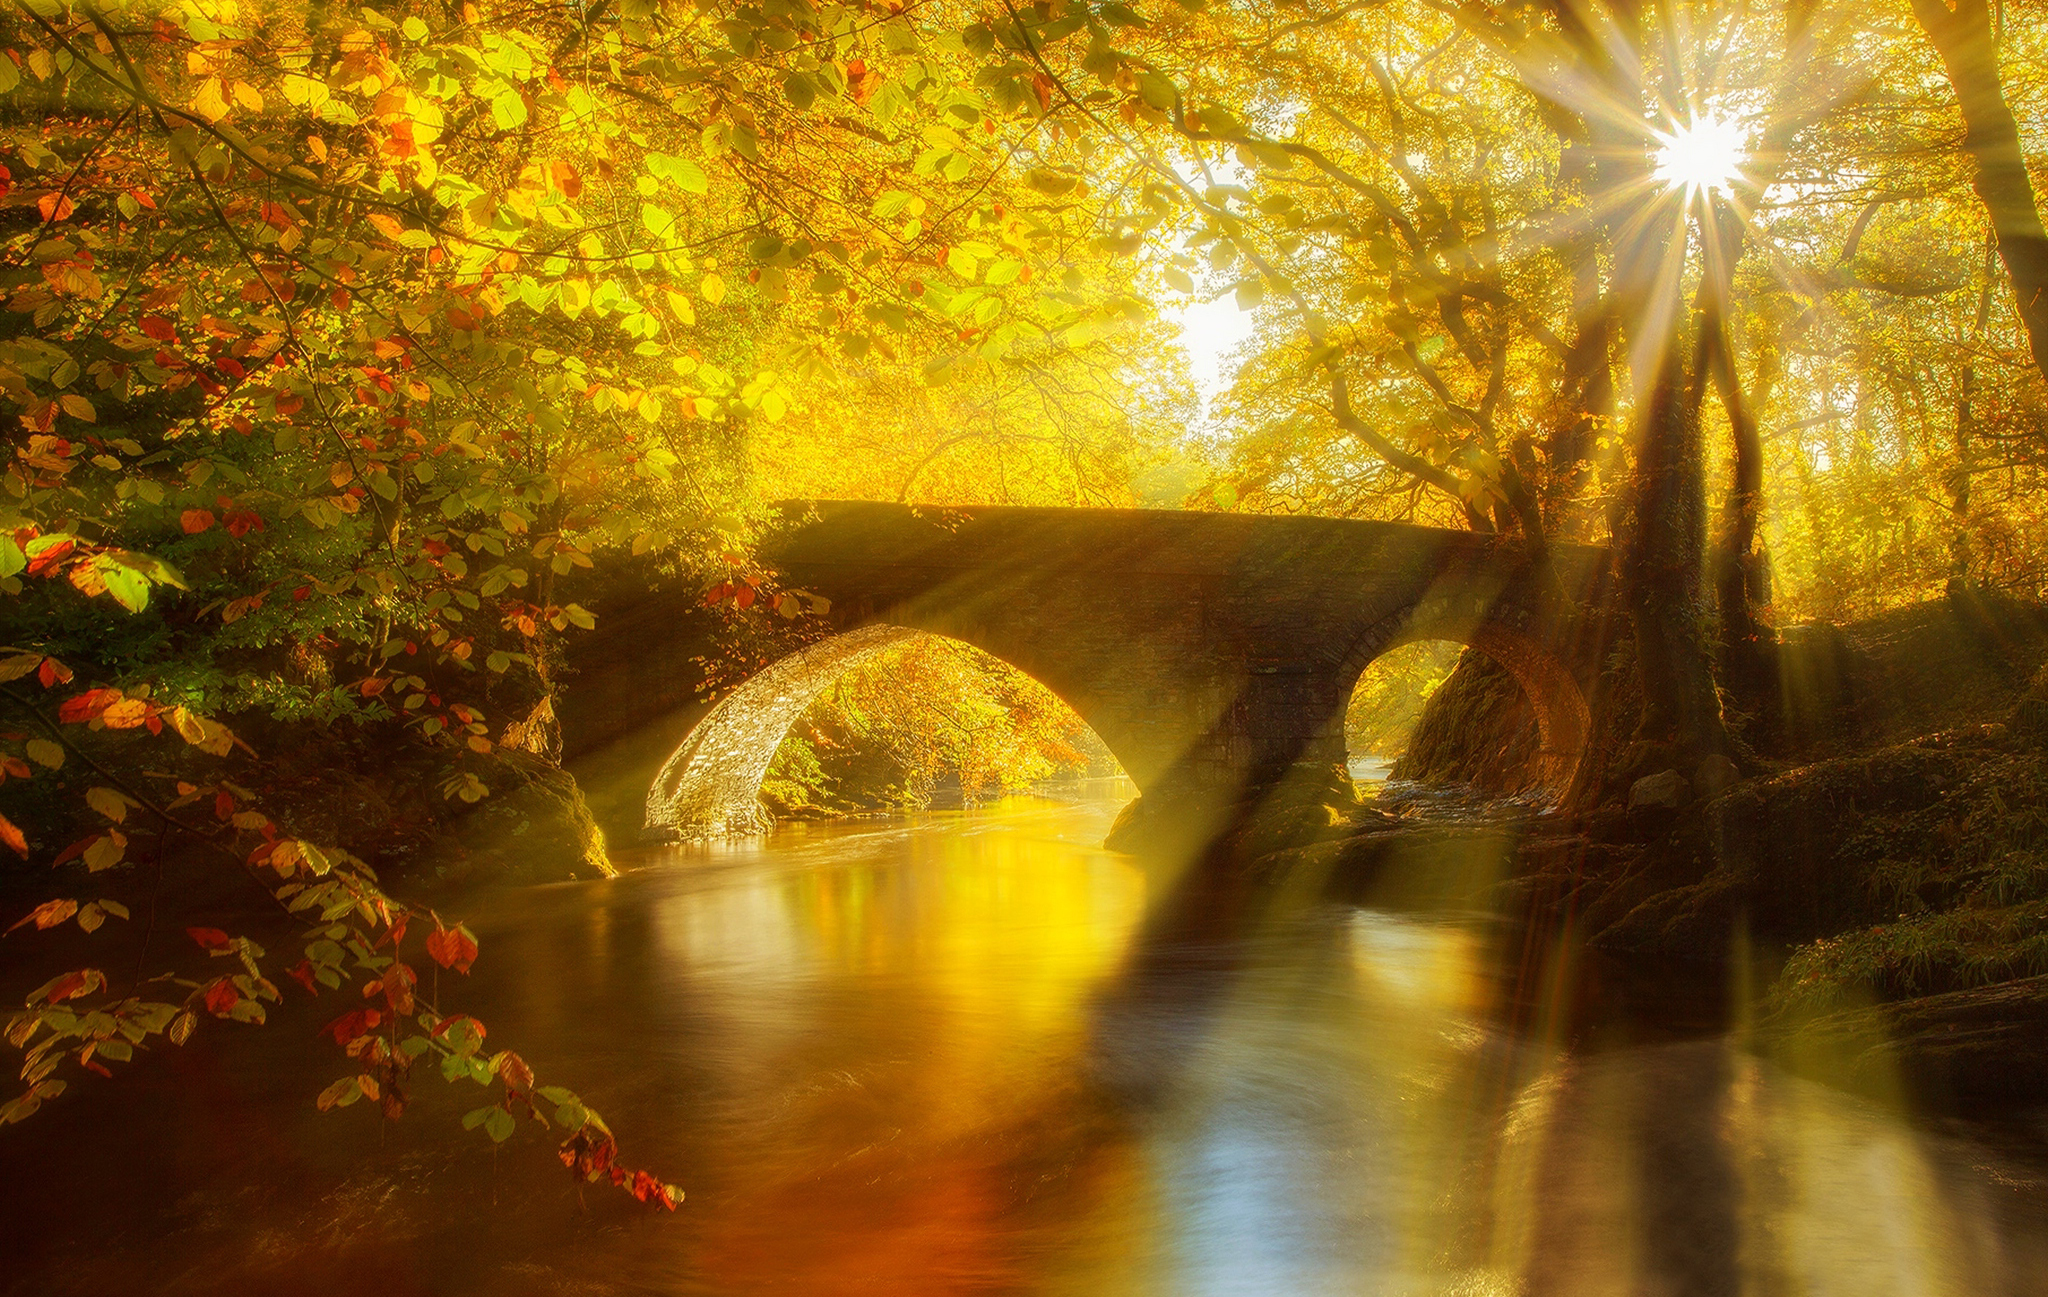 man made, bridge, fall, forest, golden, leaf, nature, river, sun, sunbeam, sunshine, tree, bridges